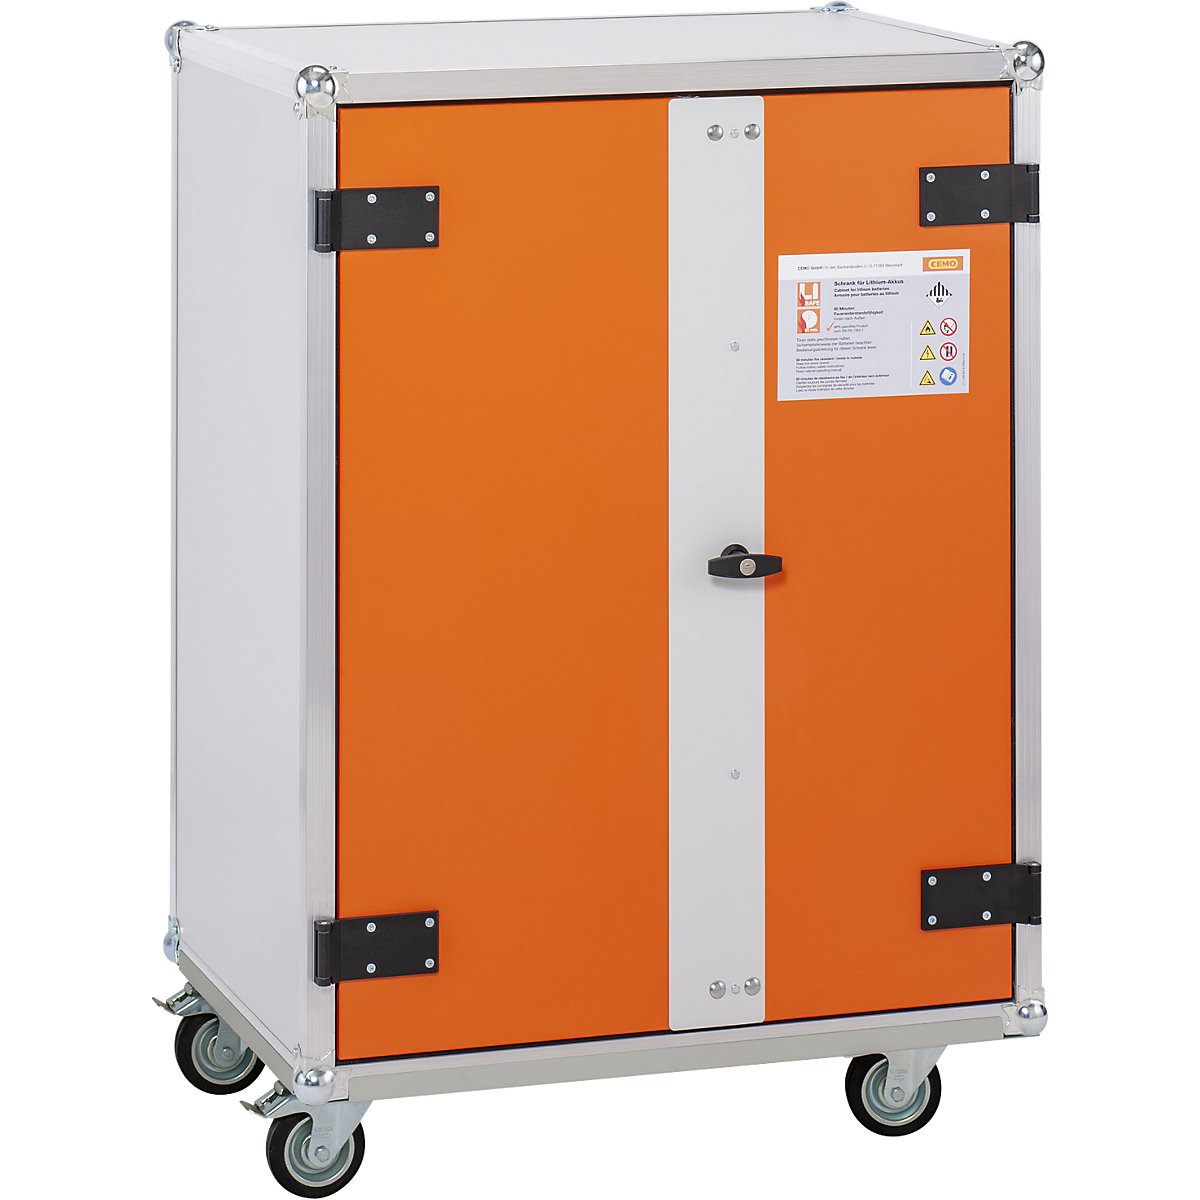 Veilige acculaadkast BASIC – CEMO, met wielen, hoogte 1150 mm, 230 V, oranje/grijs-1